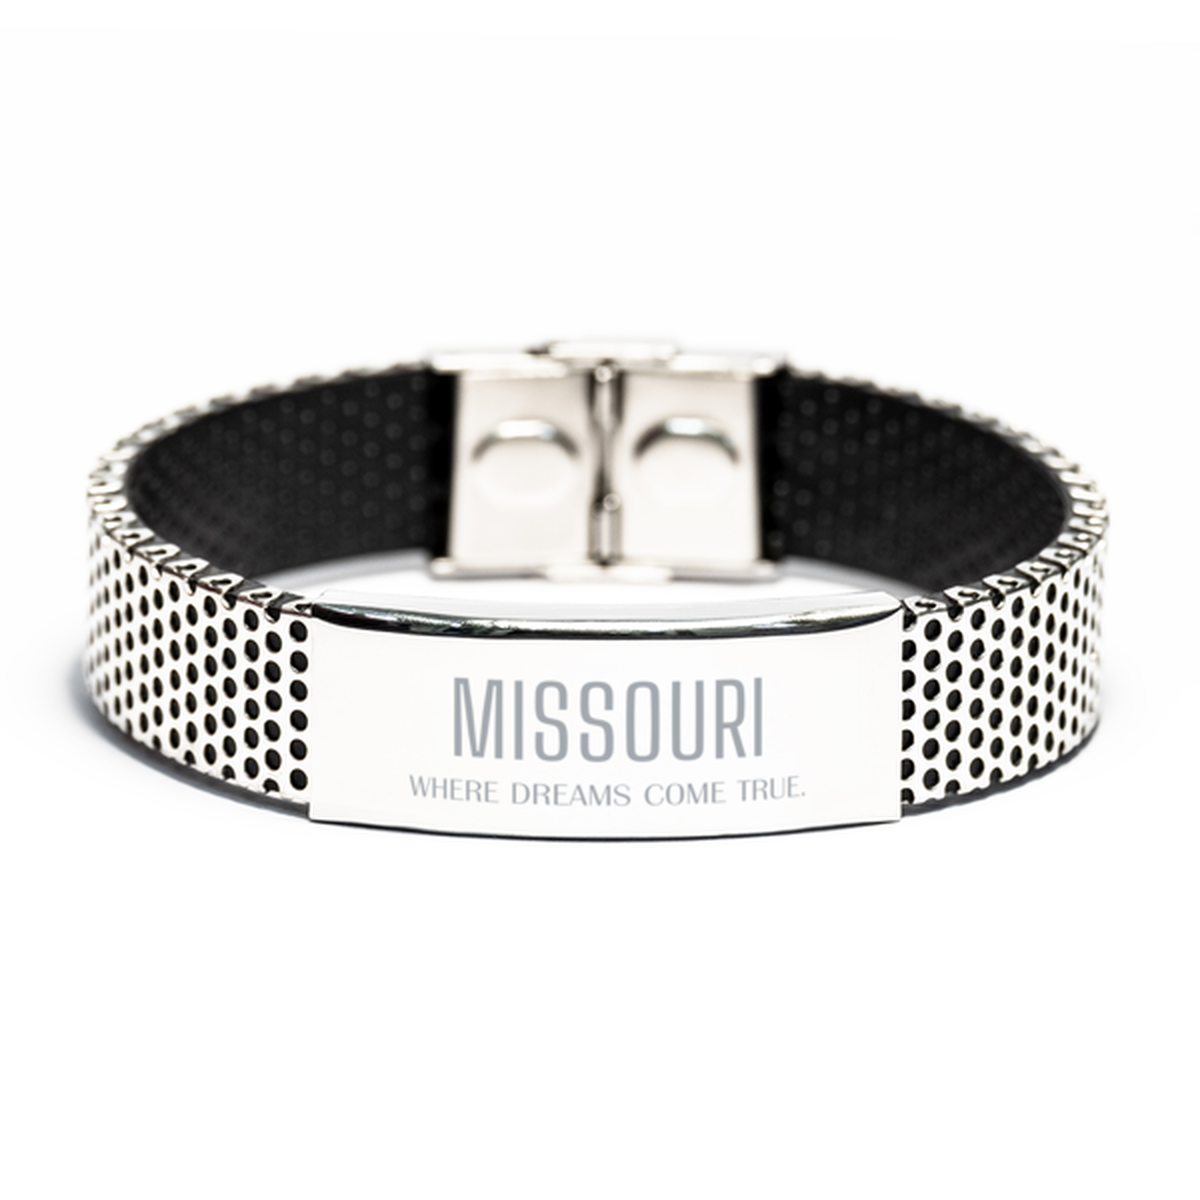 Love Missouri State Stainless Steel Bracelet, Missouri Where dreams come true, Birthday Inspirational Gifts For Missouri Men, Women, Friends